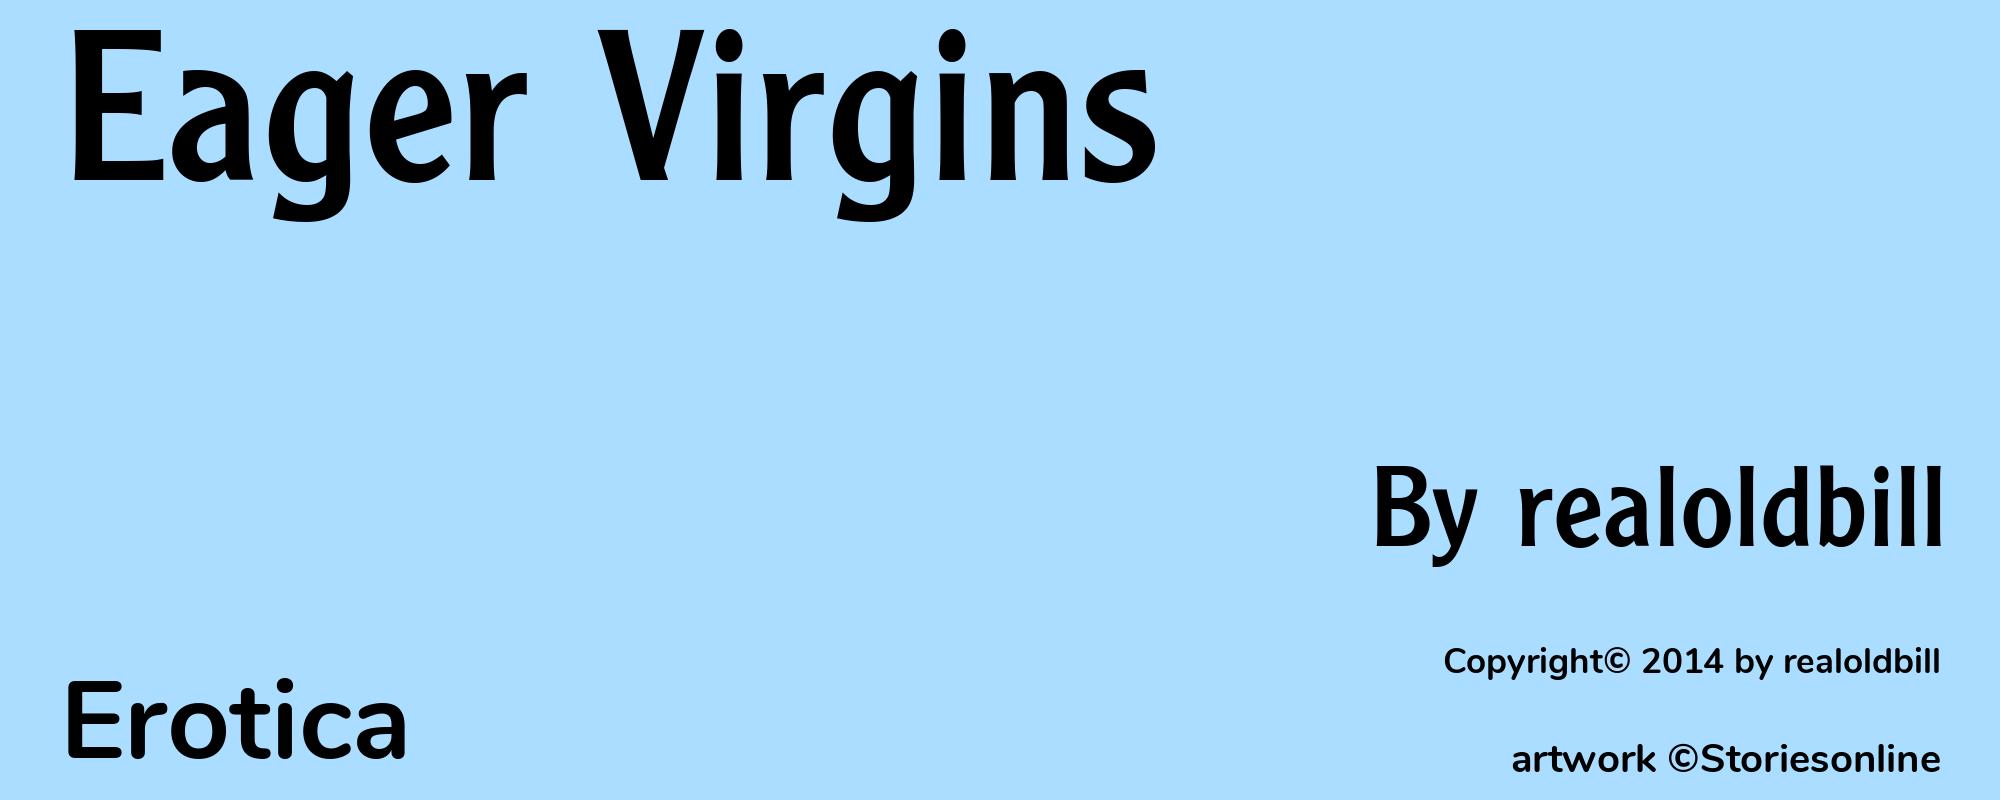 Eager Virgins - Cover